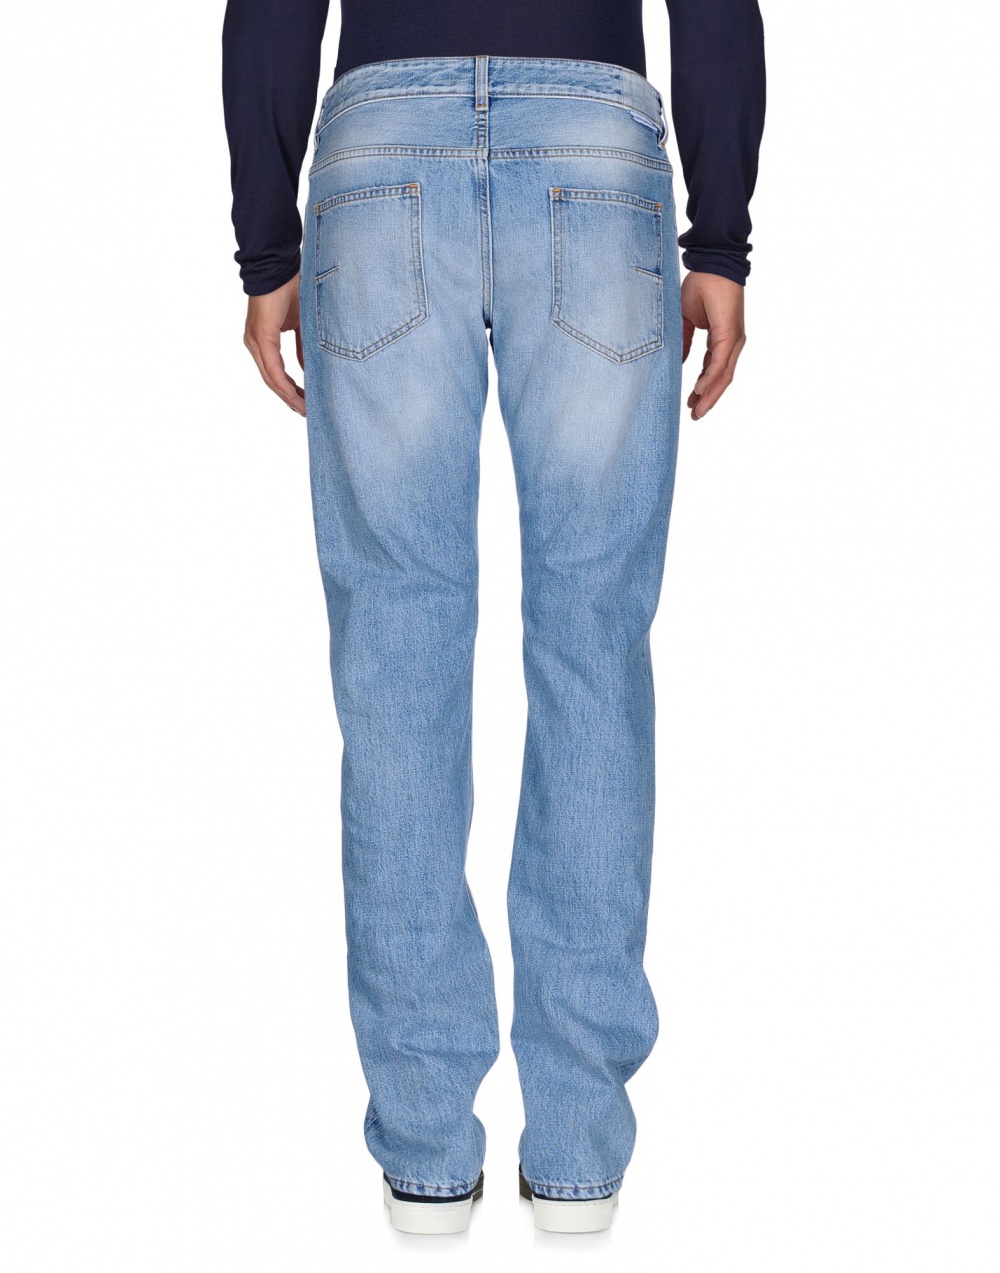 Мужские джинсы Mauro Grifoni, размер 30, на рос. 44